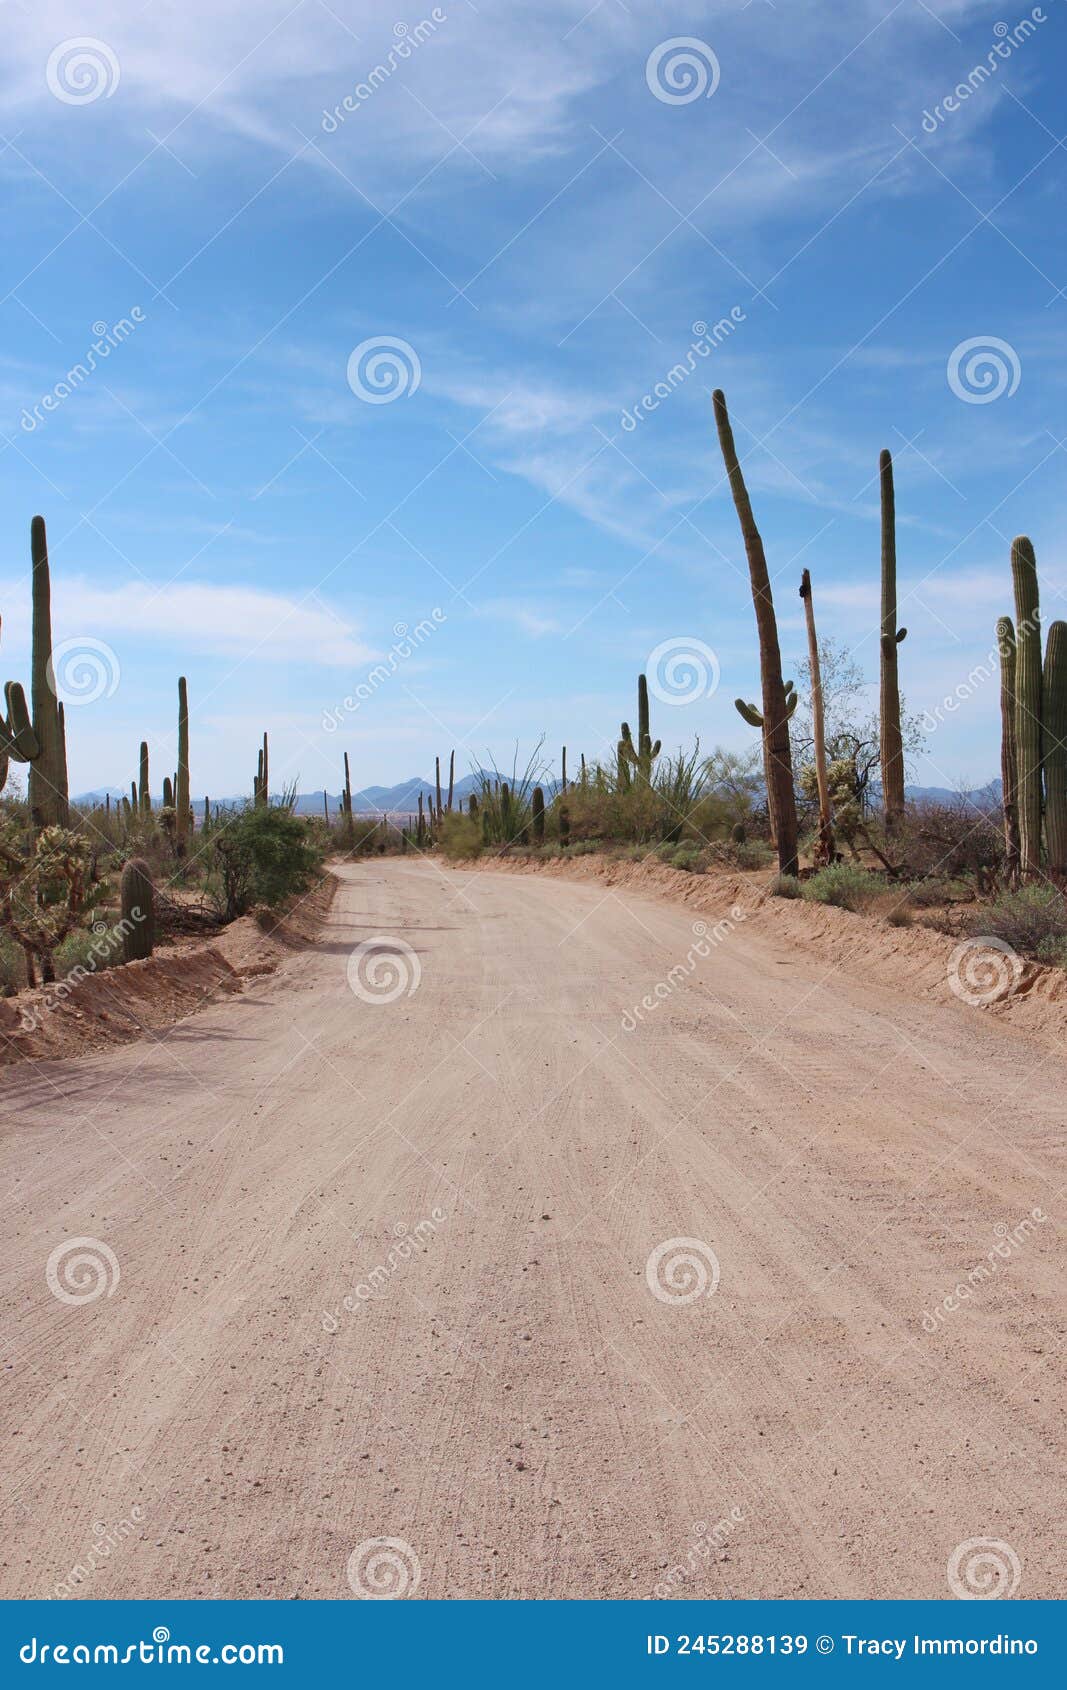 bajada loop drive, a sandy road through the desert of saguaro national park west in tucson, arizona